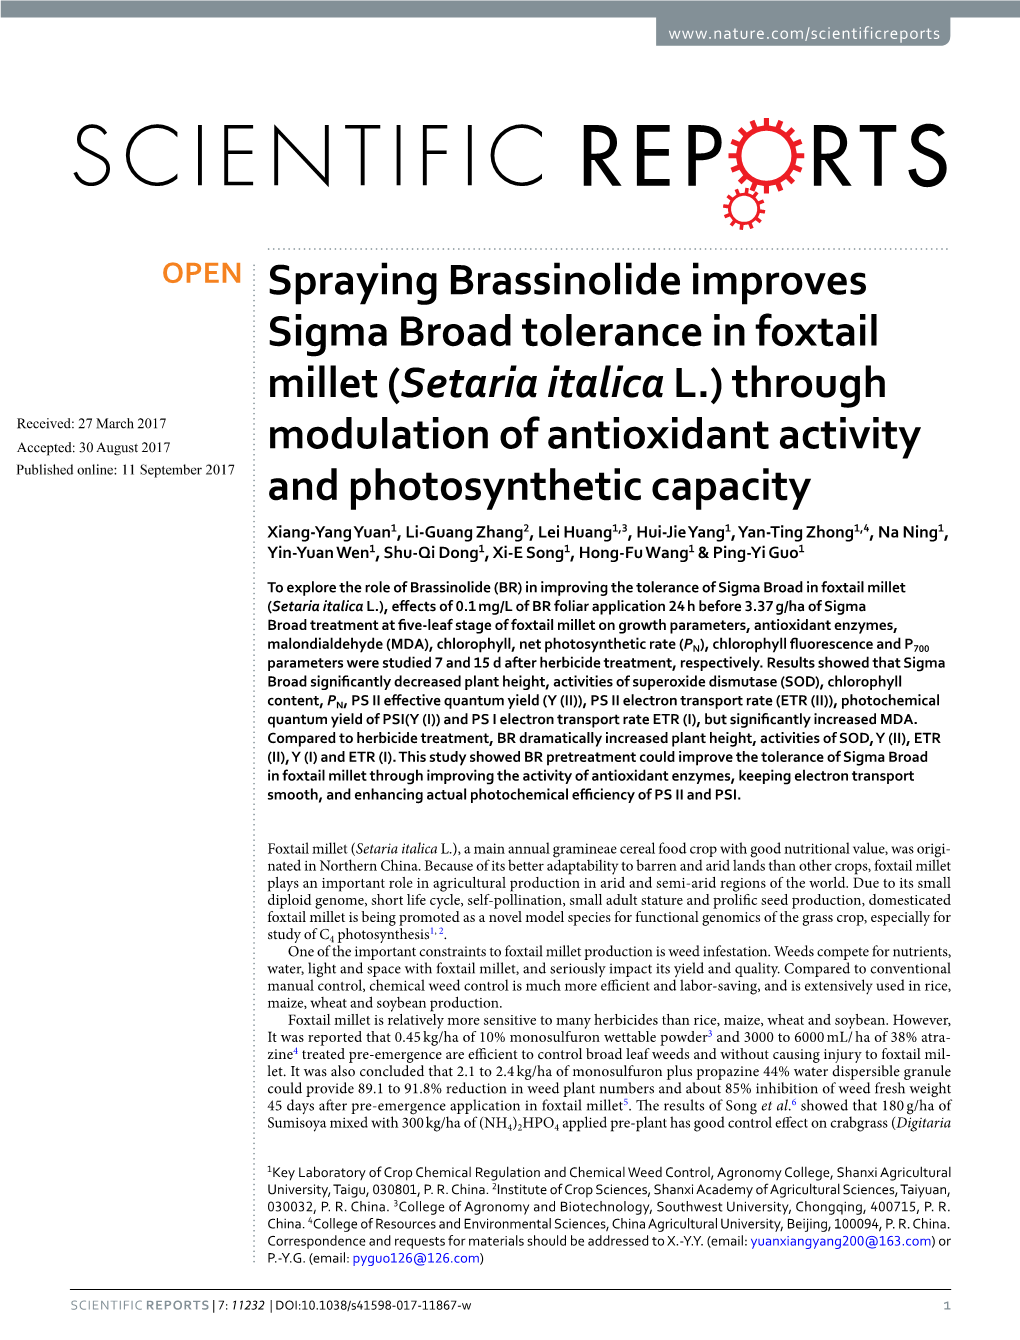 Spraying Brassinolide Improves Sigma Broad Tolerance in Foxtail Millet